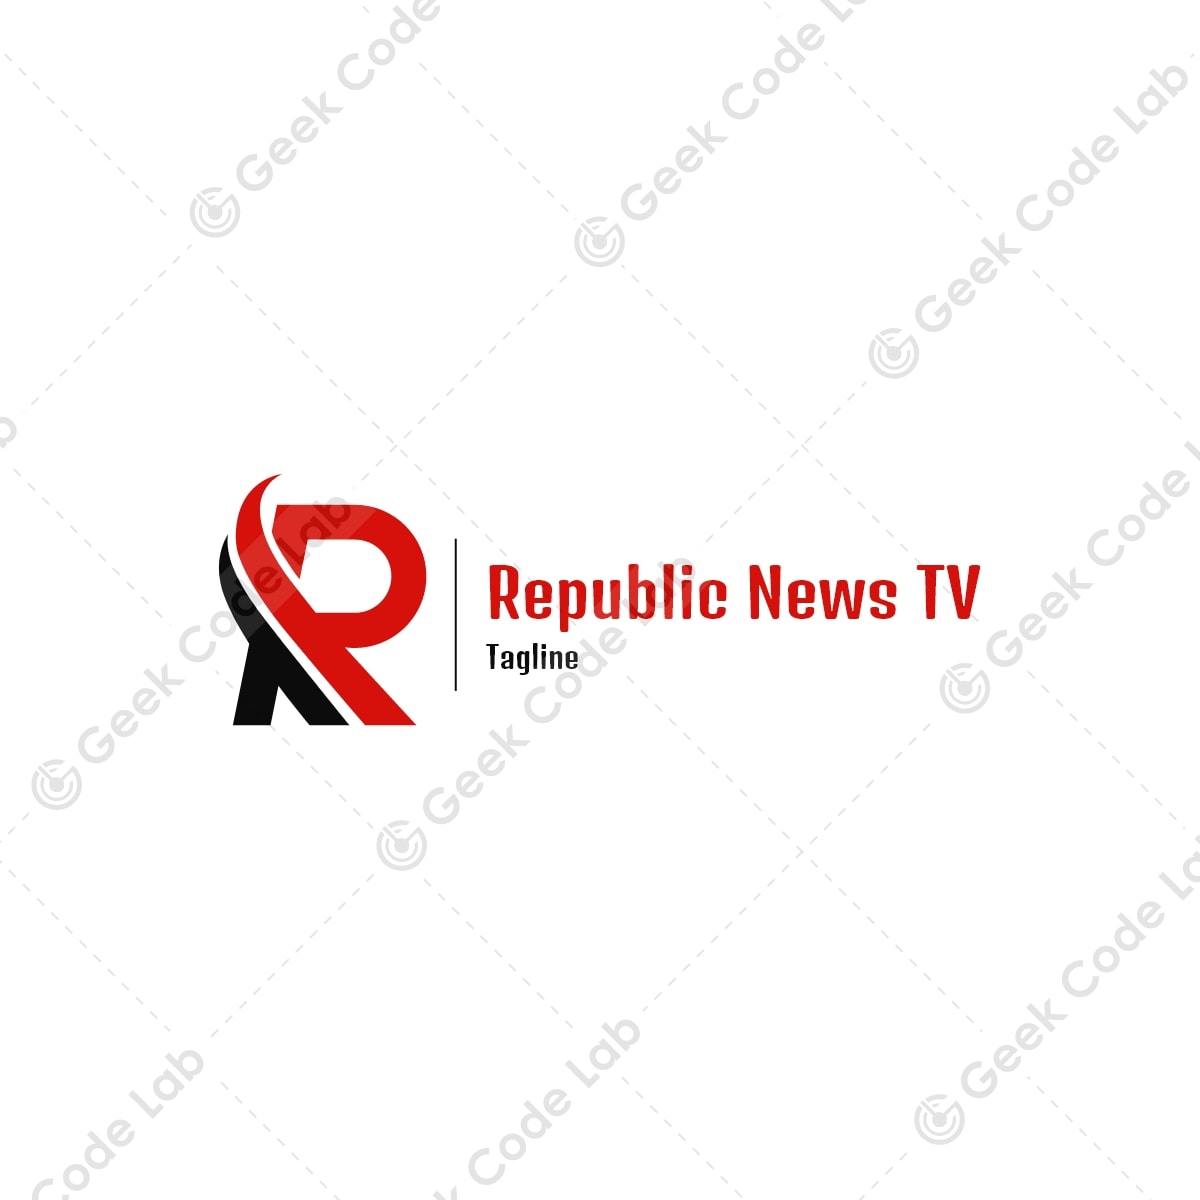 Republic News TV